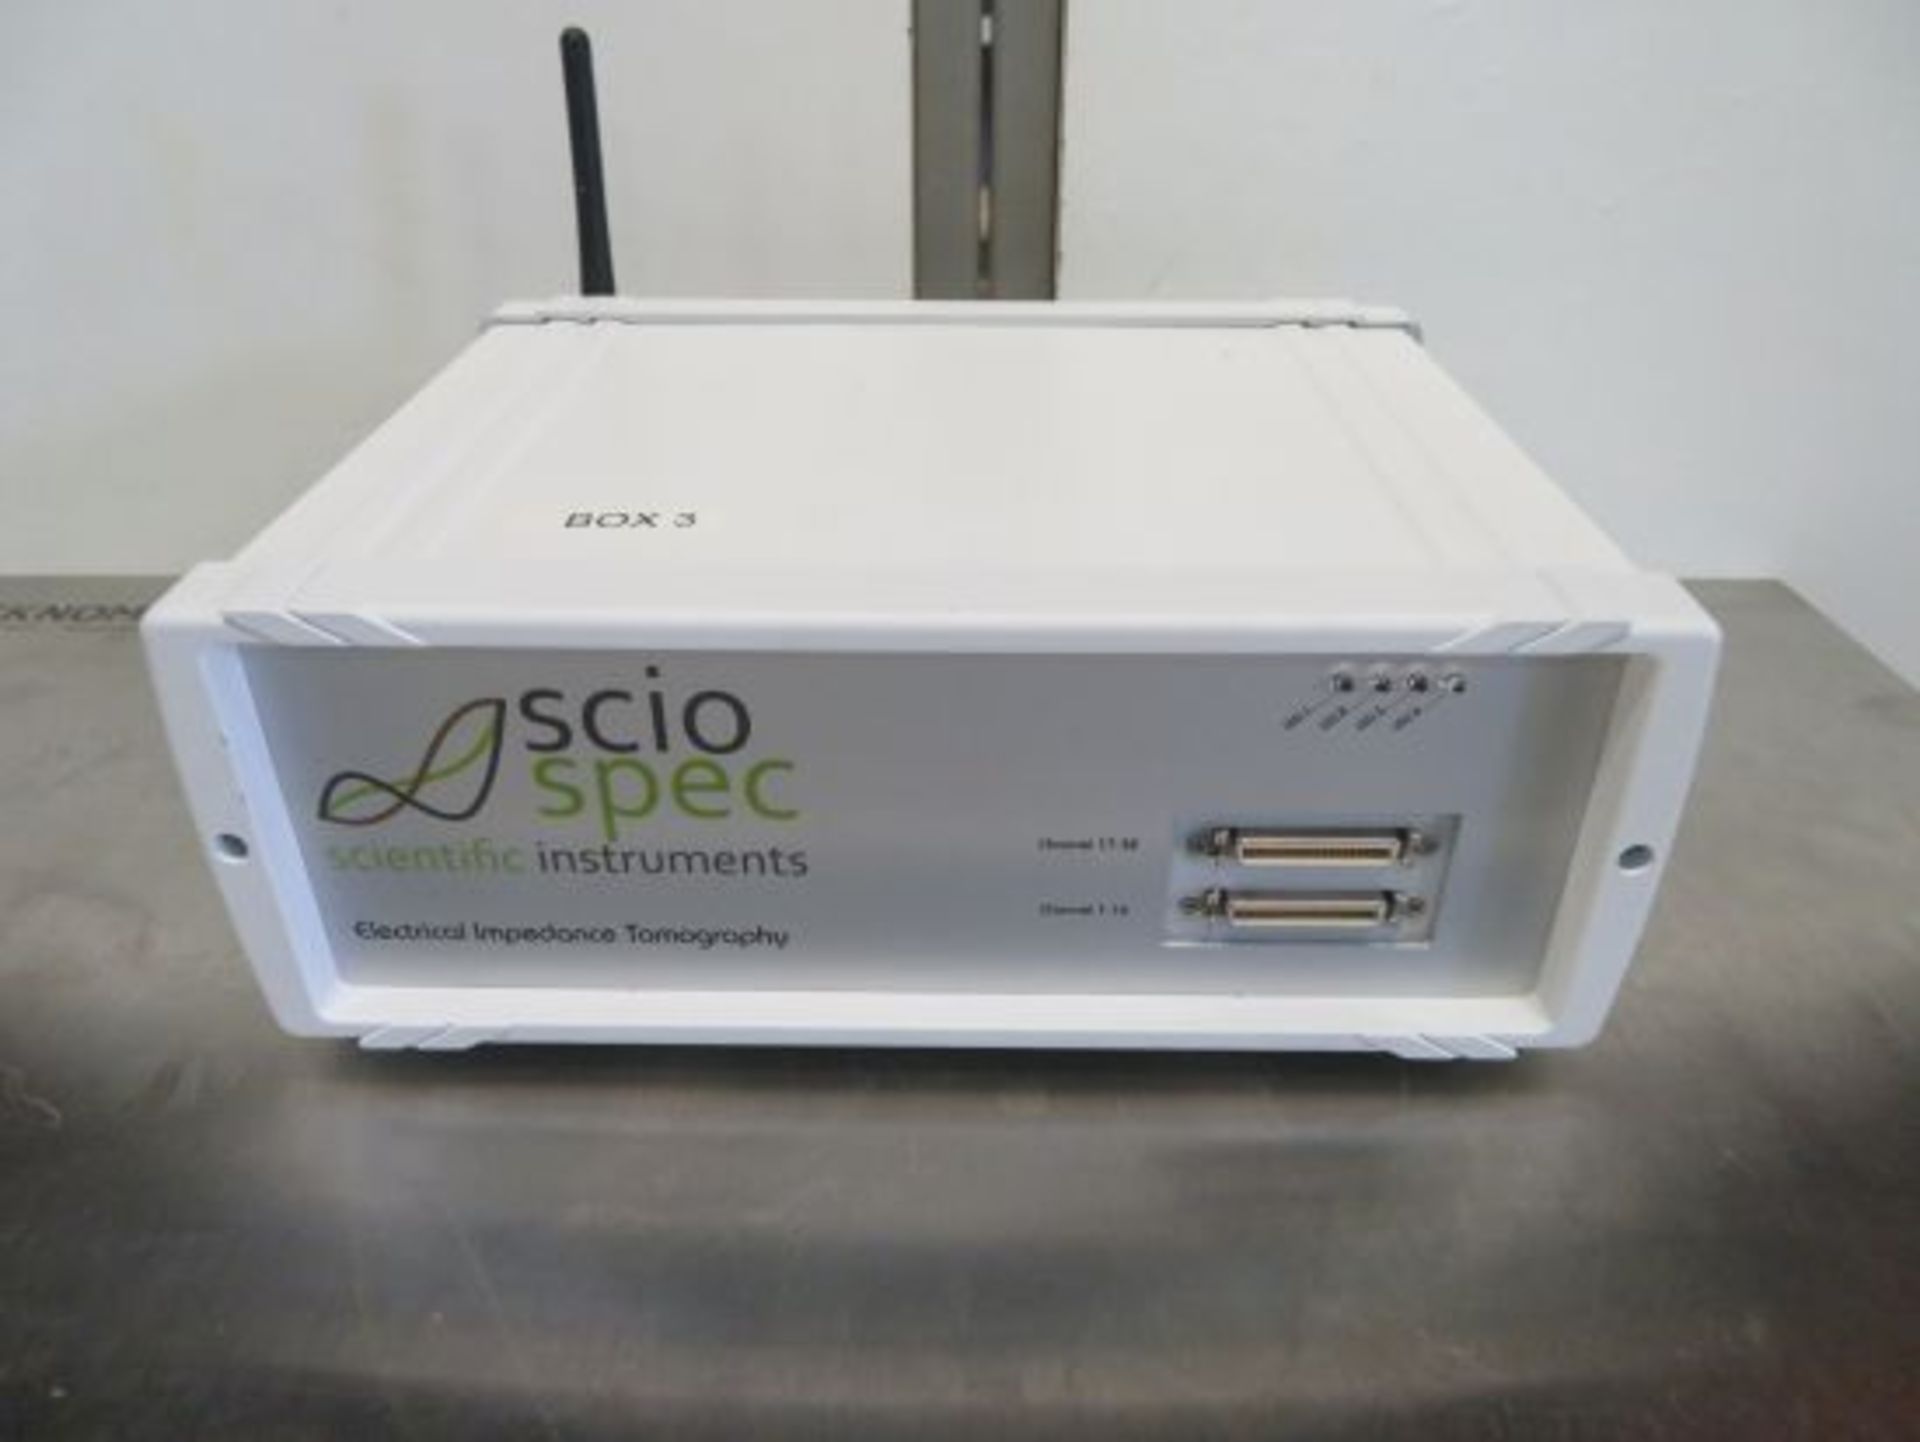 Scio Spec Scientific Instruments Electrical Impedance Tomography (E.I.T) Unit, Serial No 01-0019- - Image 3 of 3